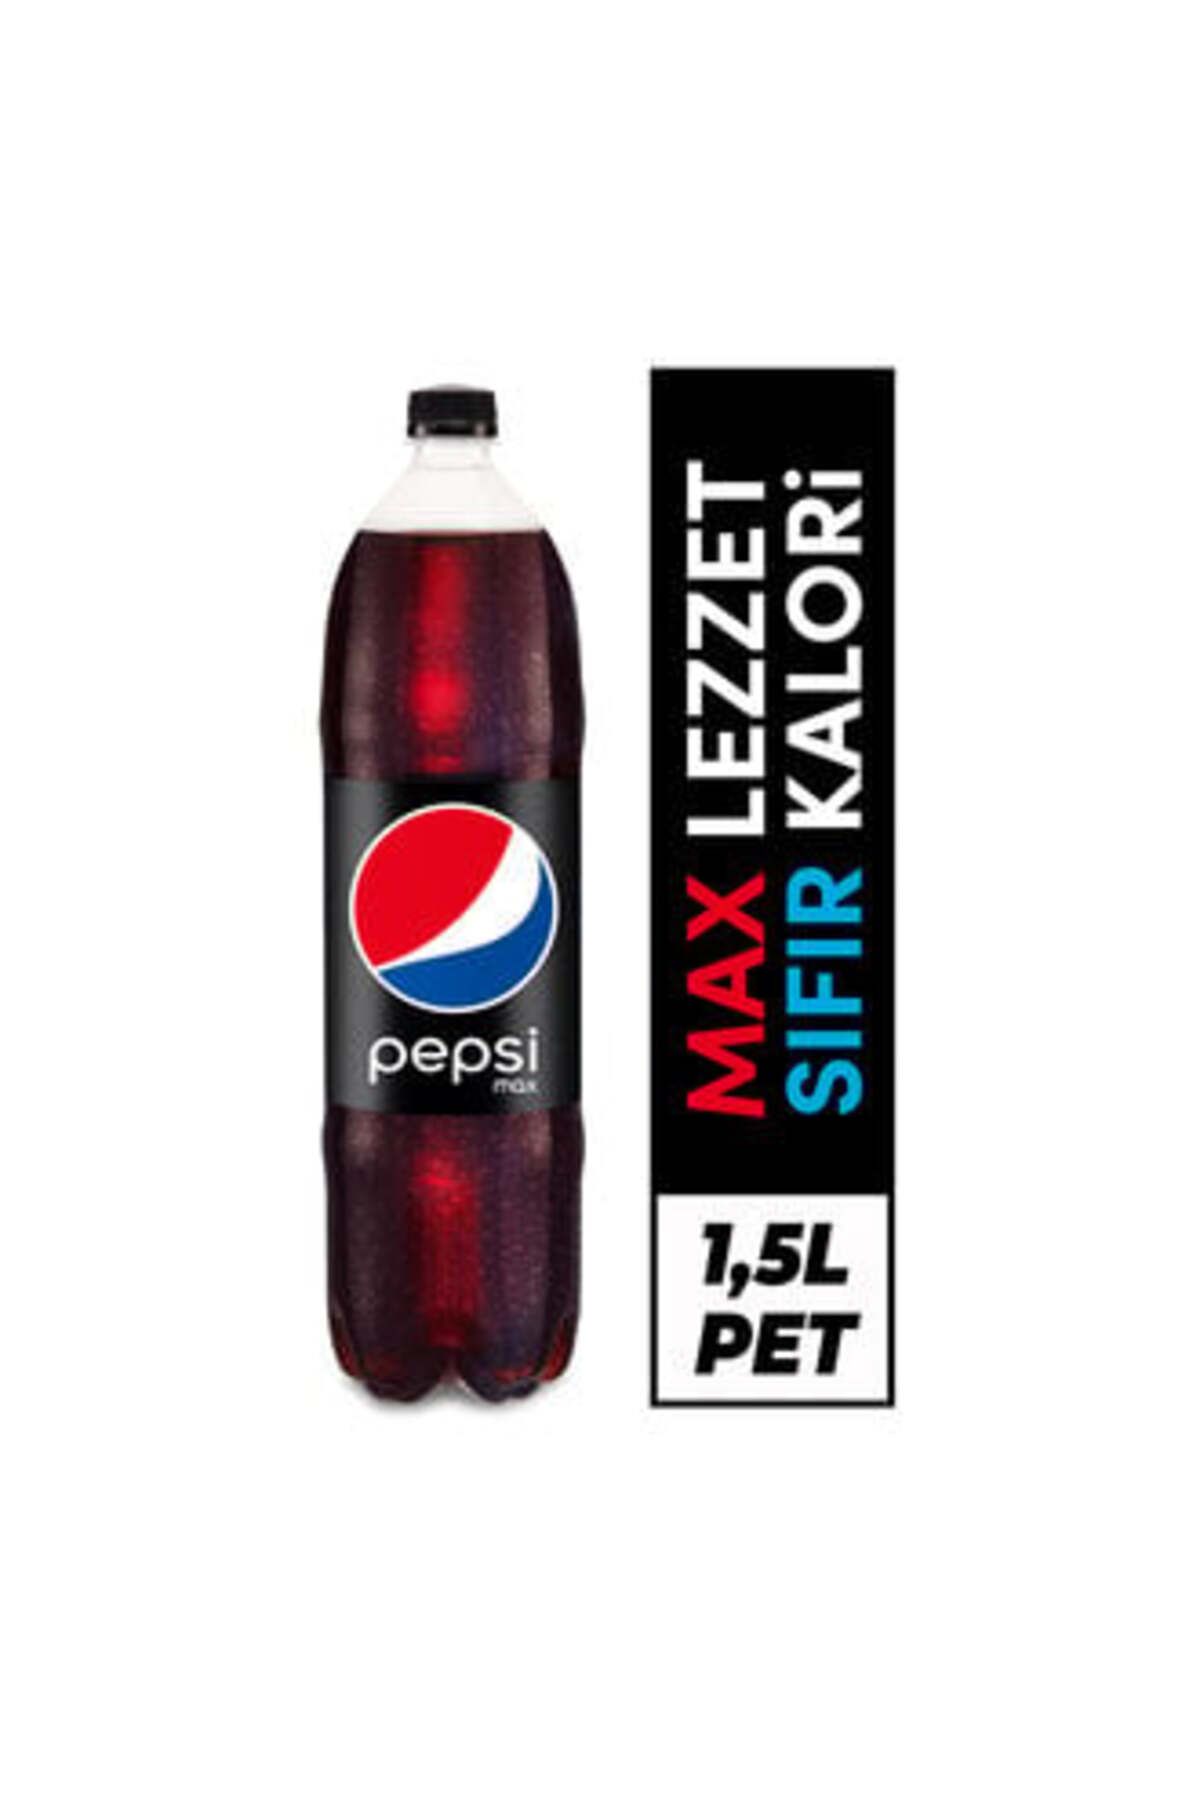 Pepsi max şekersiz kola pet 1,5 l  5 adet